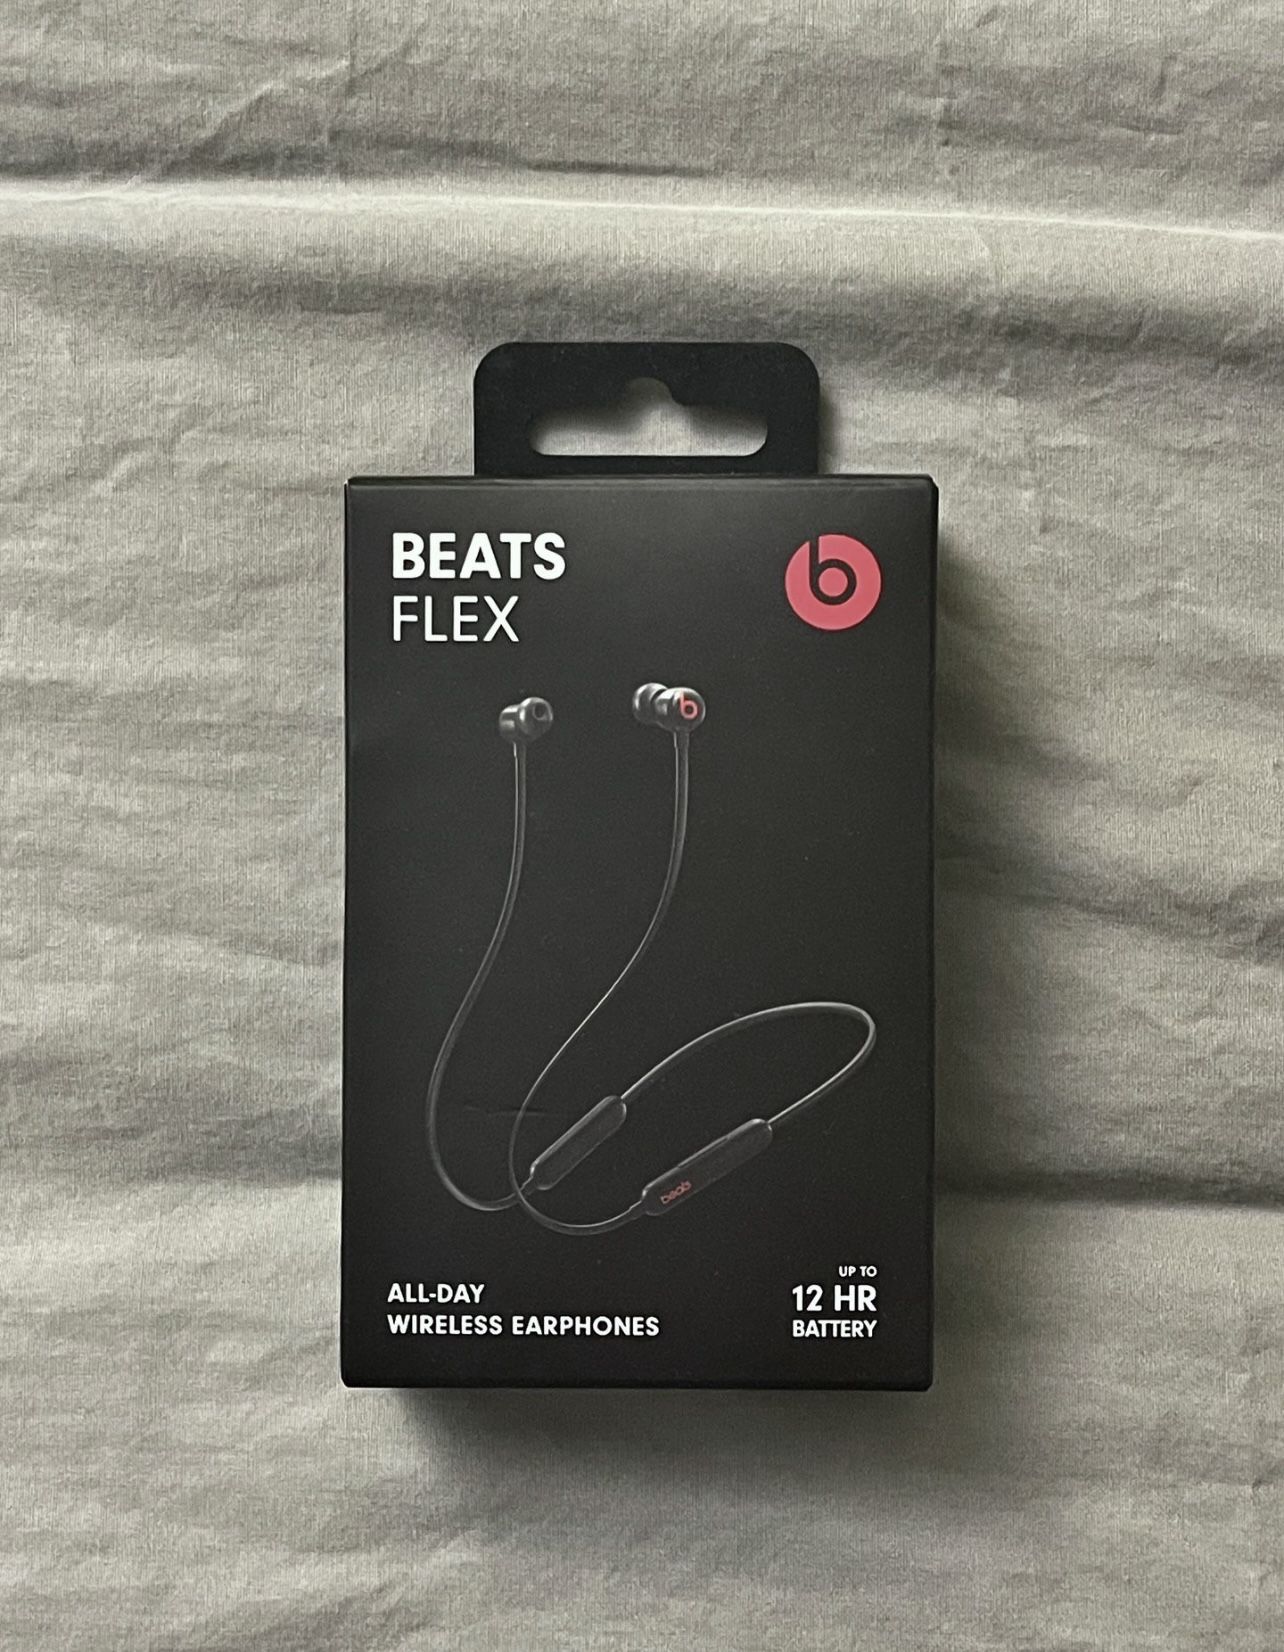 Brand New Unboxed Beats Flex Wireless Earbuds - Apple W1 Headphone